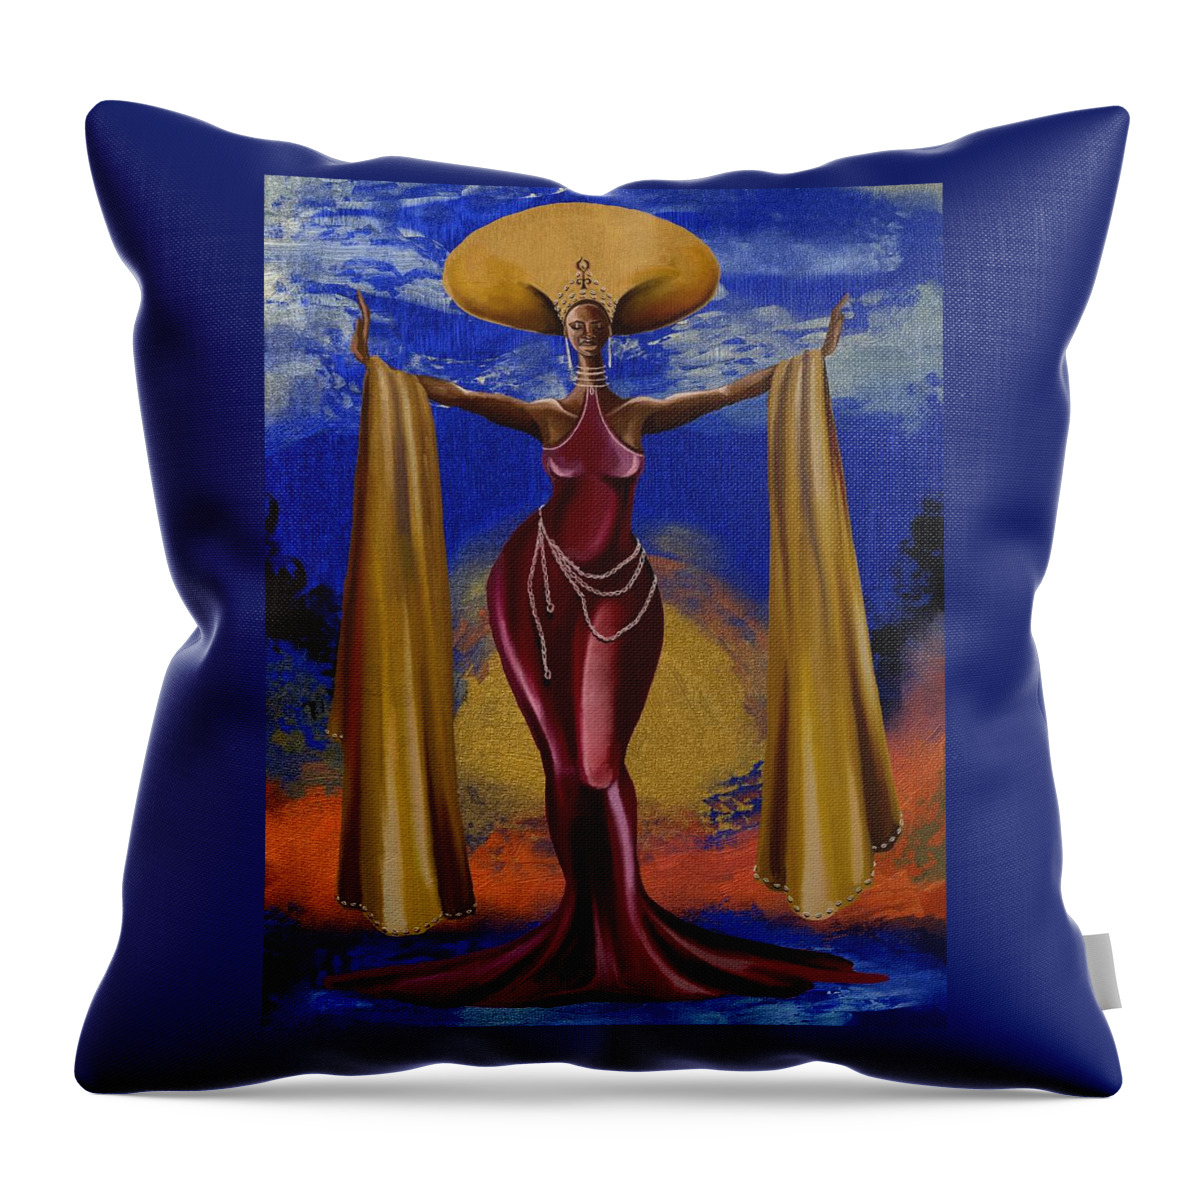 Black Throw Pillow featuring the digital art Goddess by Terri Meredith